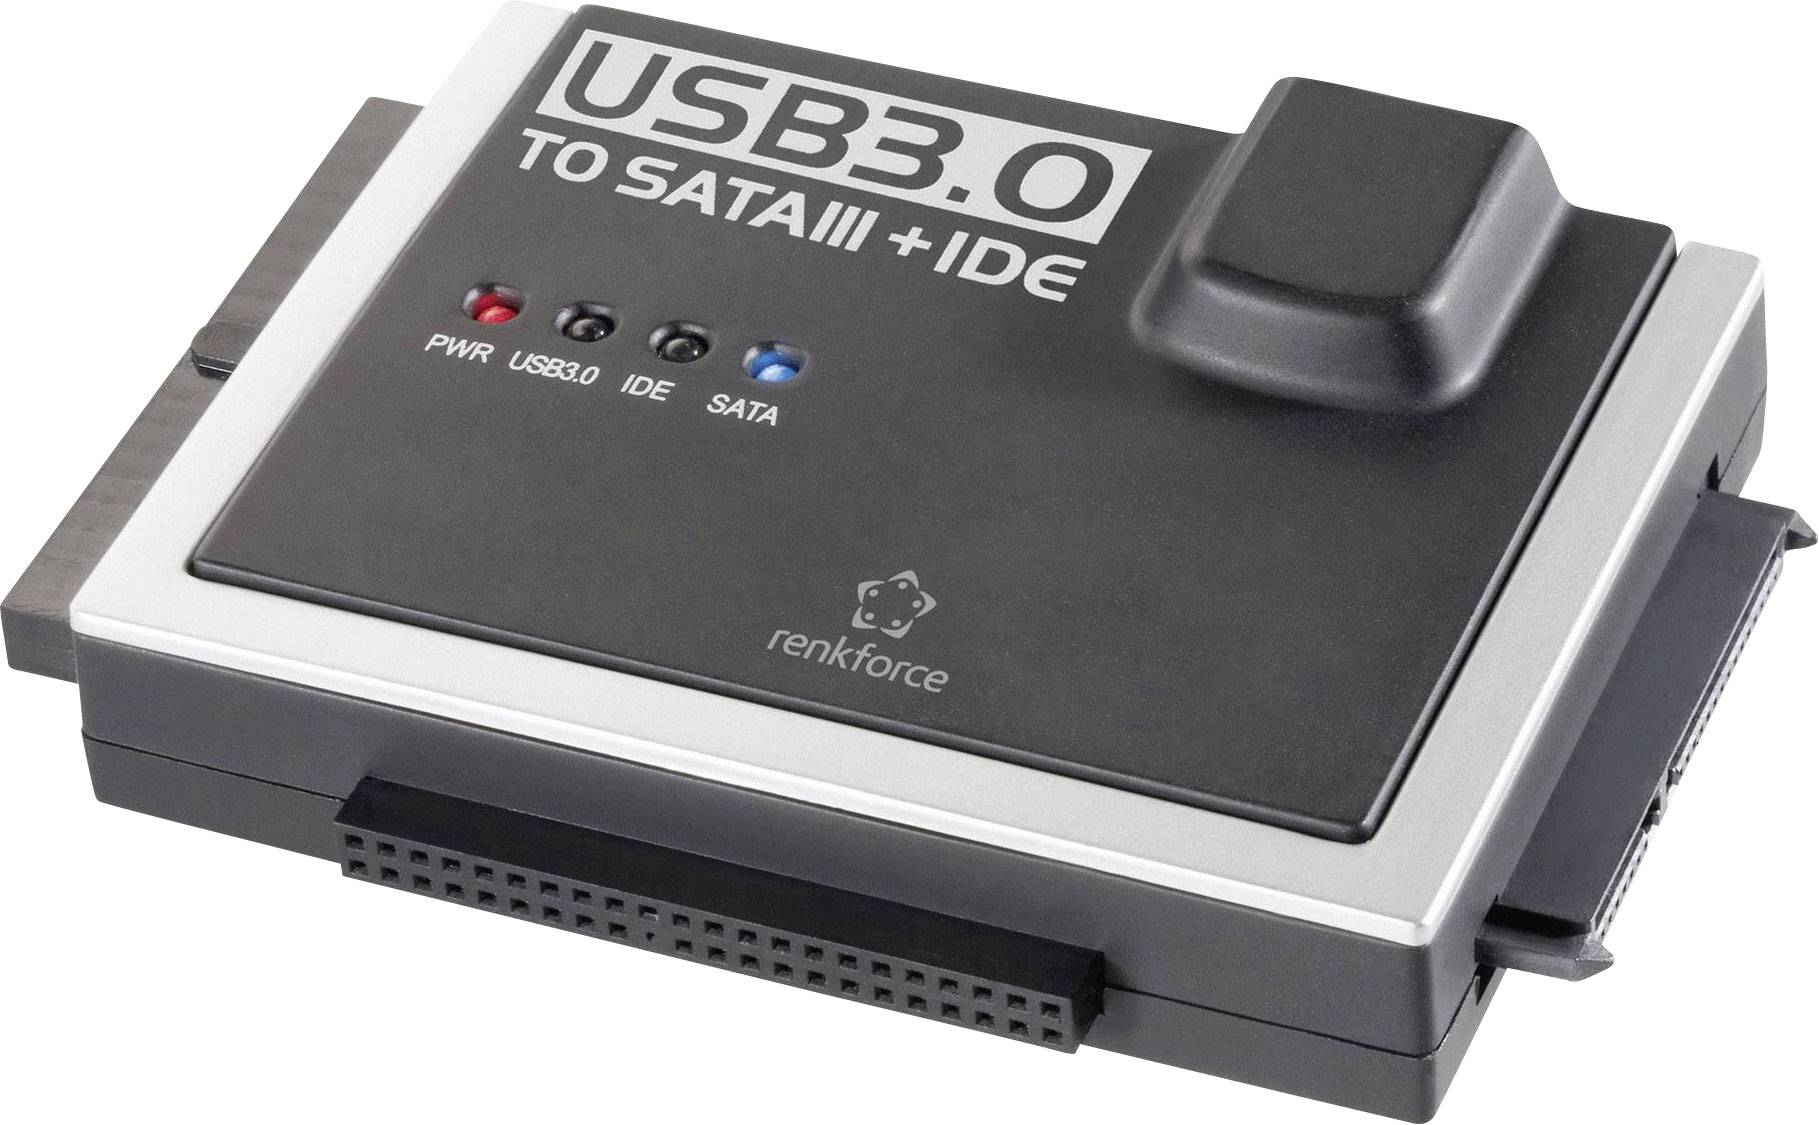 CONRAD renkforce USB 3.0 zu IDE+SATA Konverter